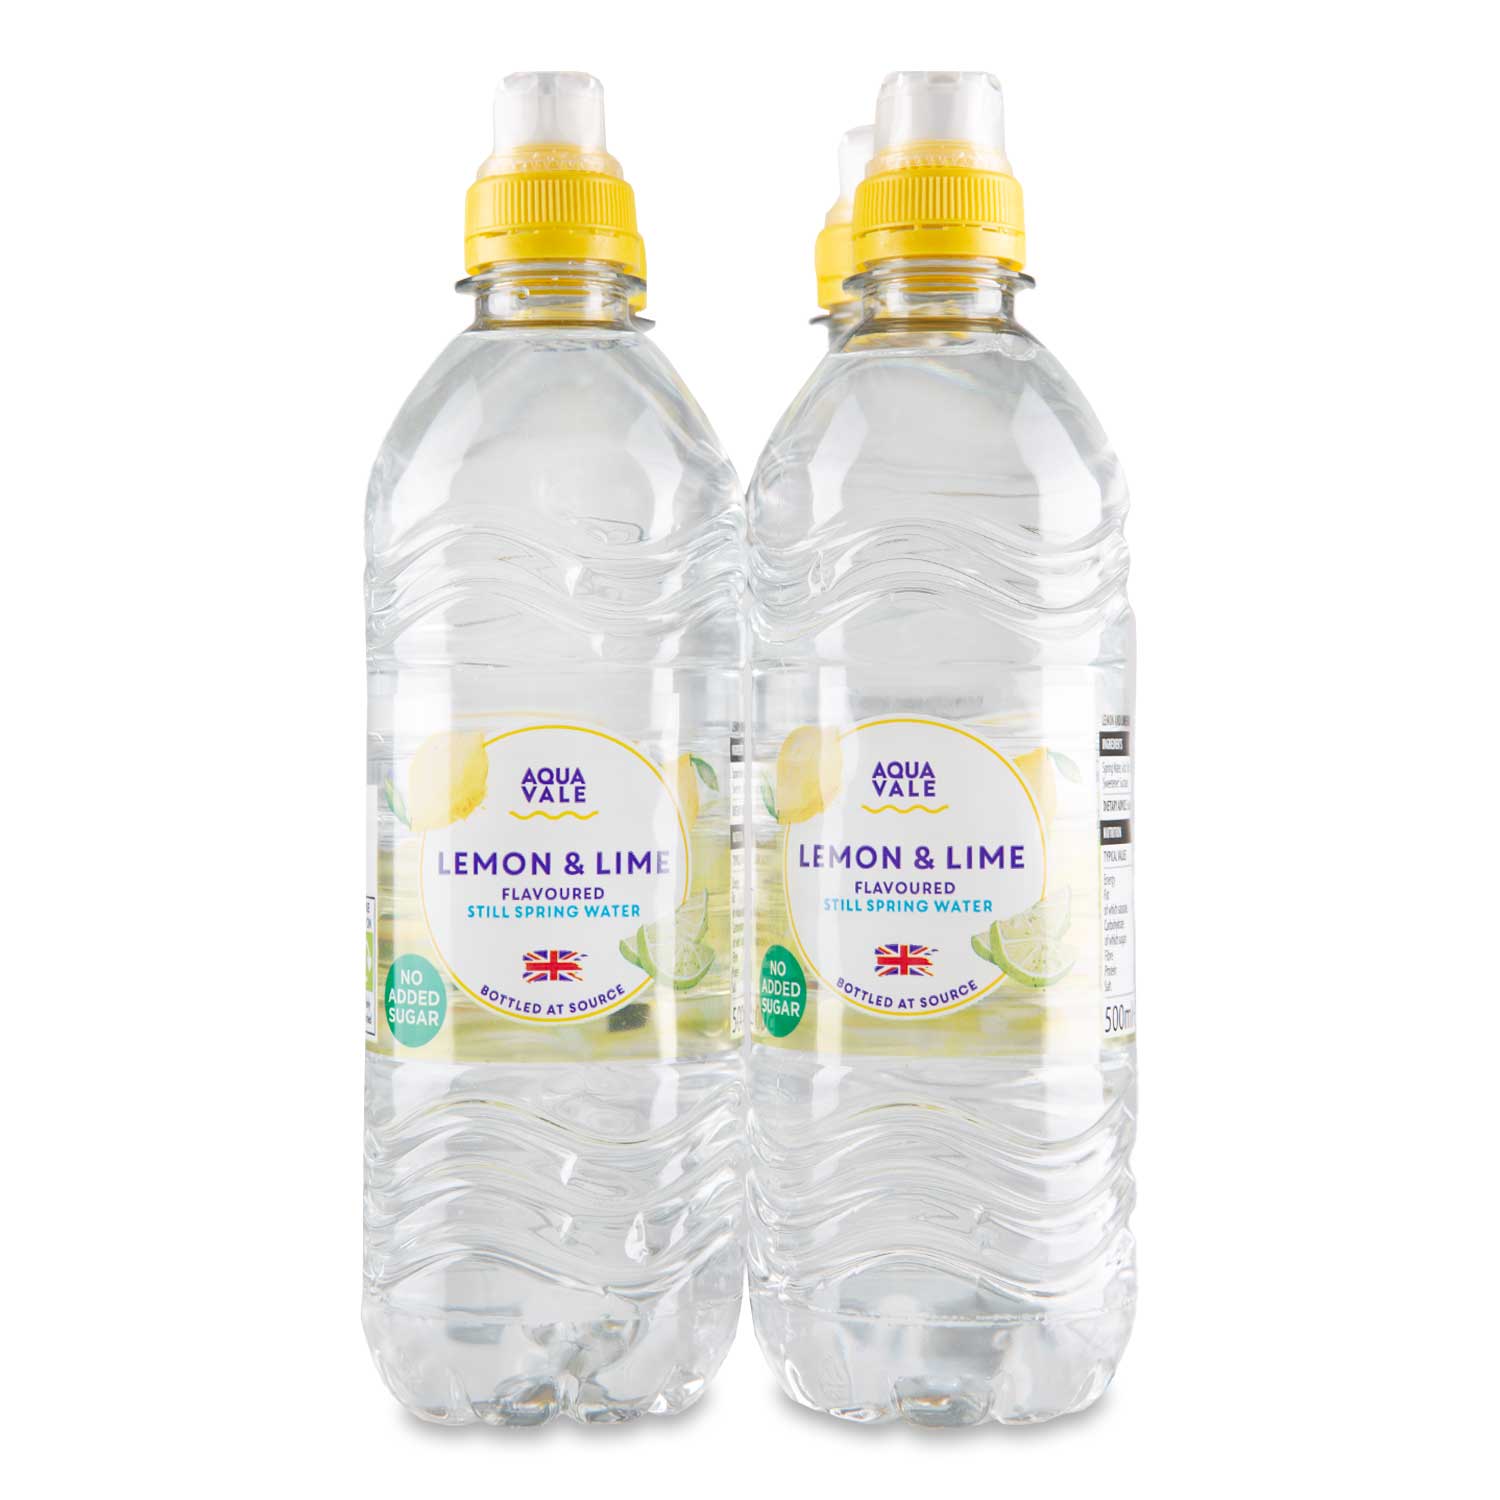 WSO - Aqua Vale Lemon & Lime Flavoured Still Spring Water 500ml 1x24